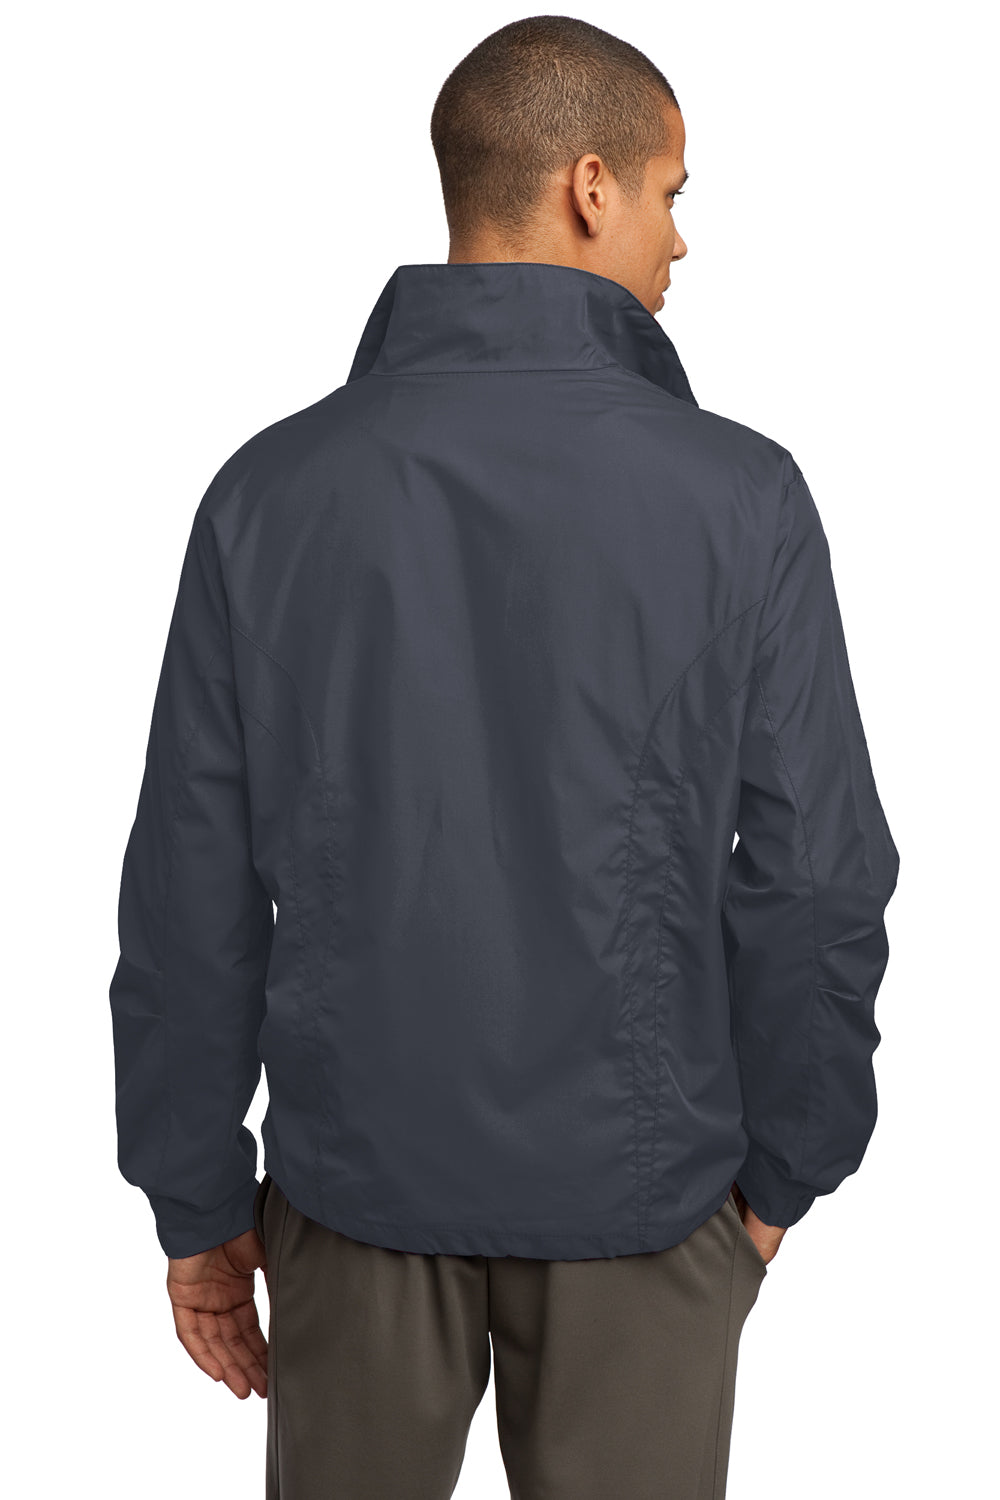 Sport-Tek JST70 Mens Water Resistant Full Zip Wind Jacket Graphite Grey Back